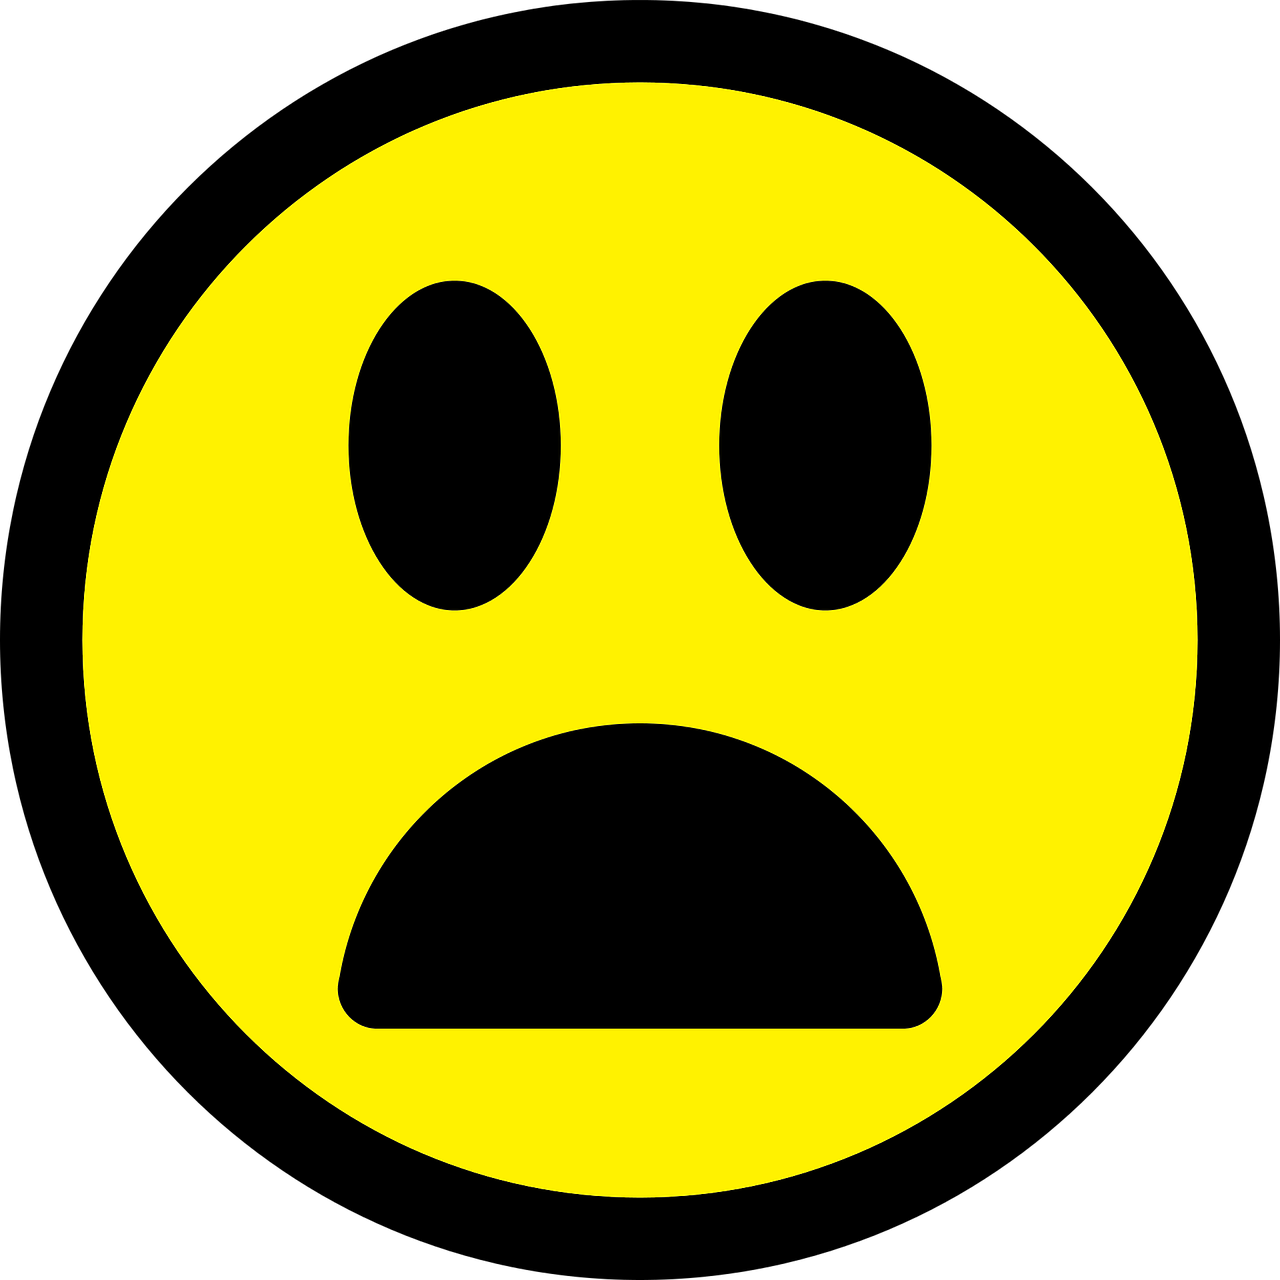 image-result-for-meanings-of-emoji-faces-and-symbols-emoji-all-emoji